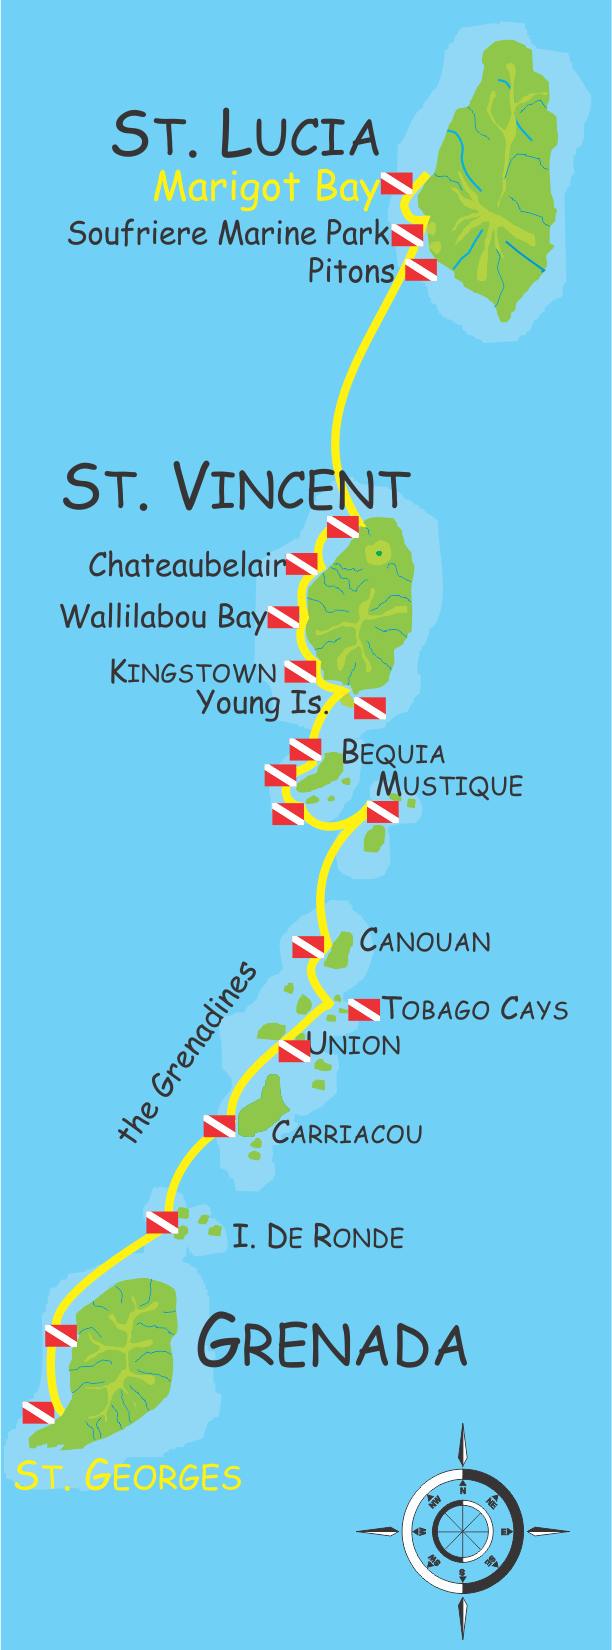 Grenadines island chain windwards BWI